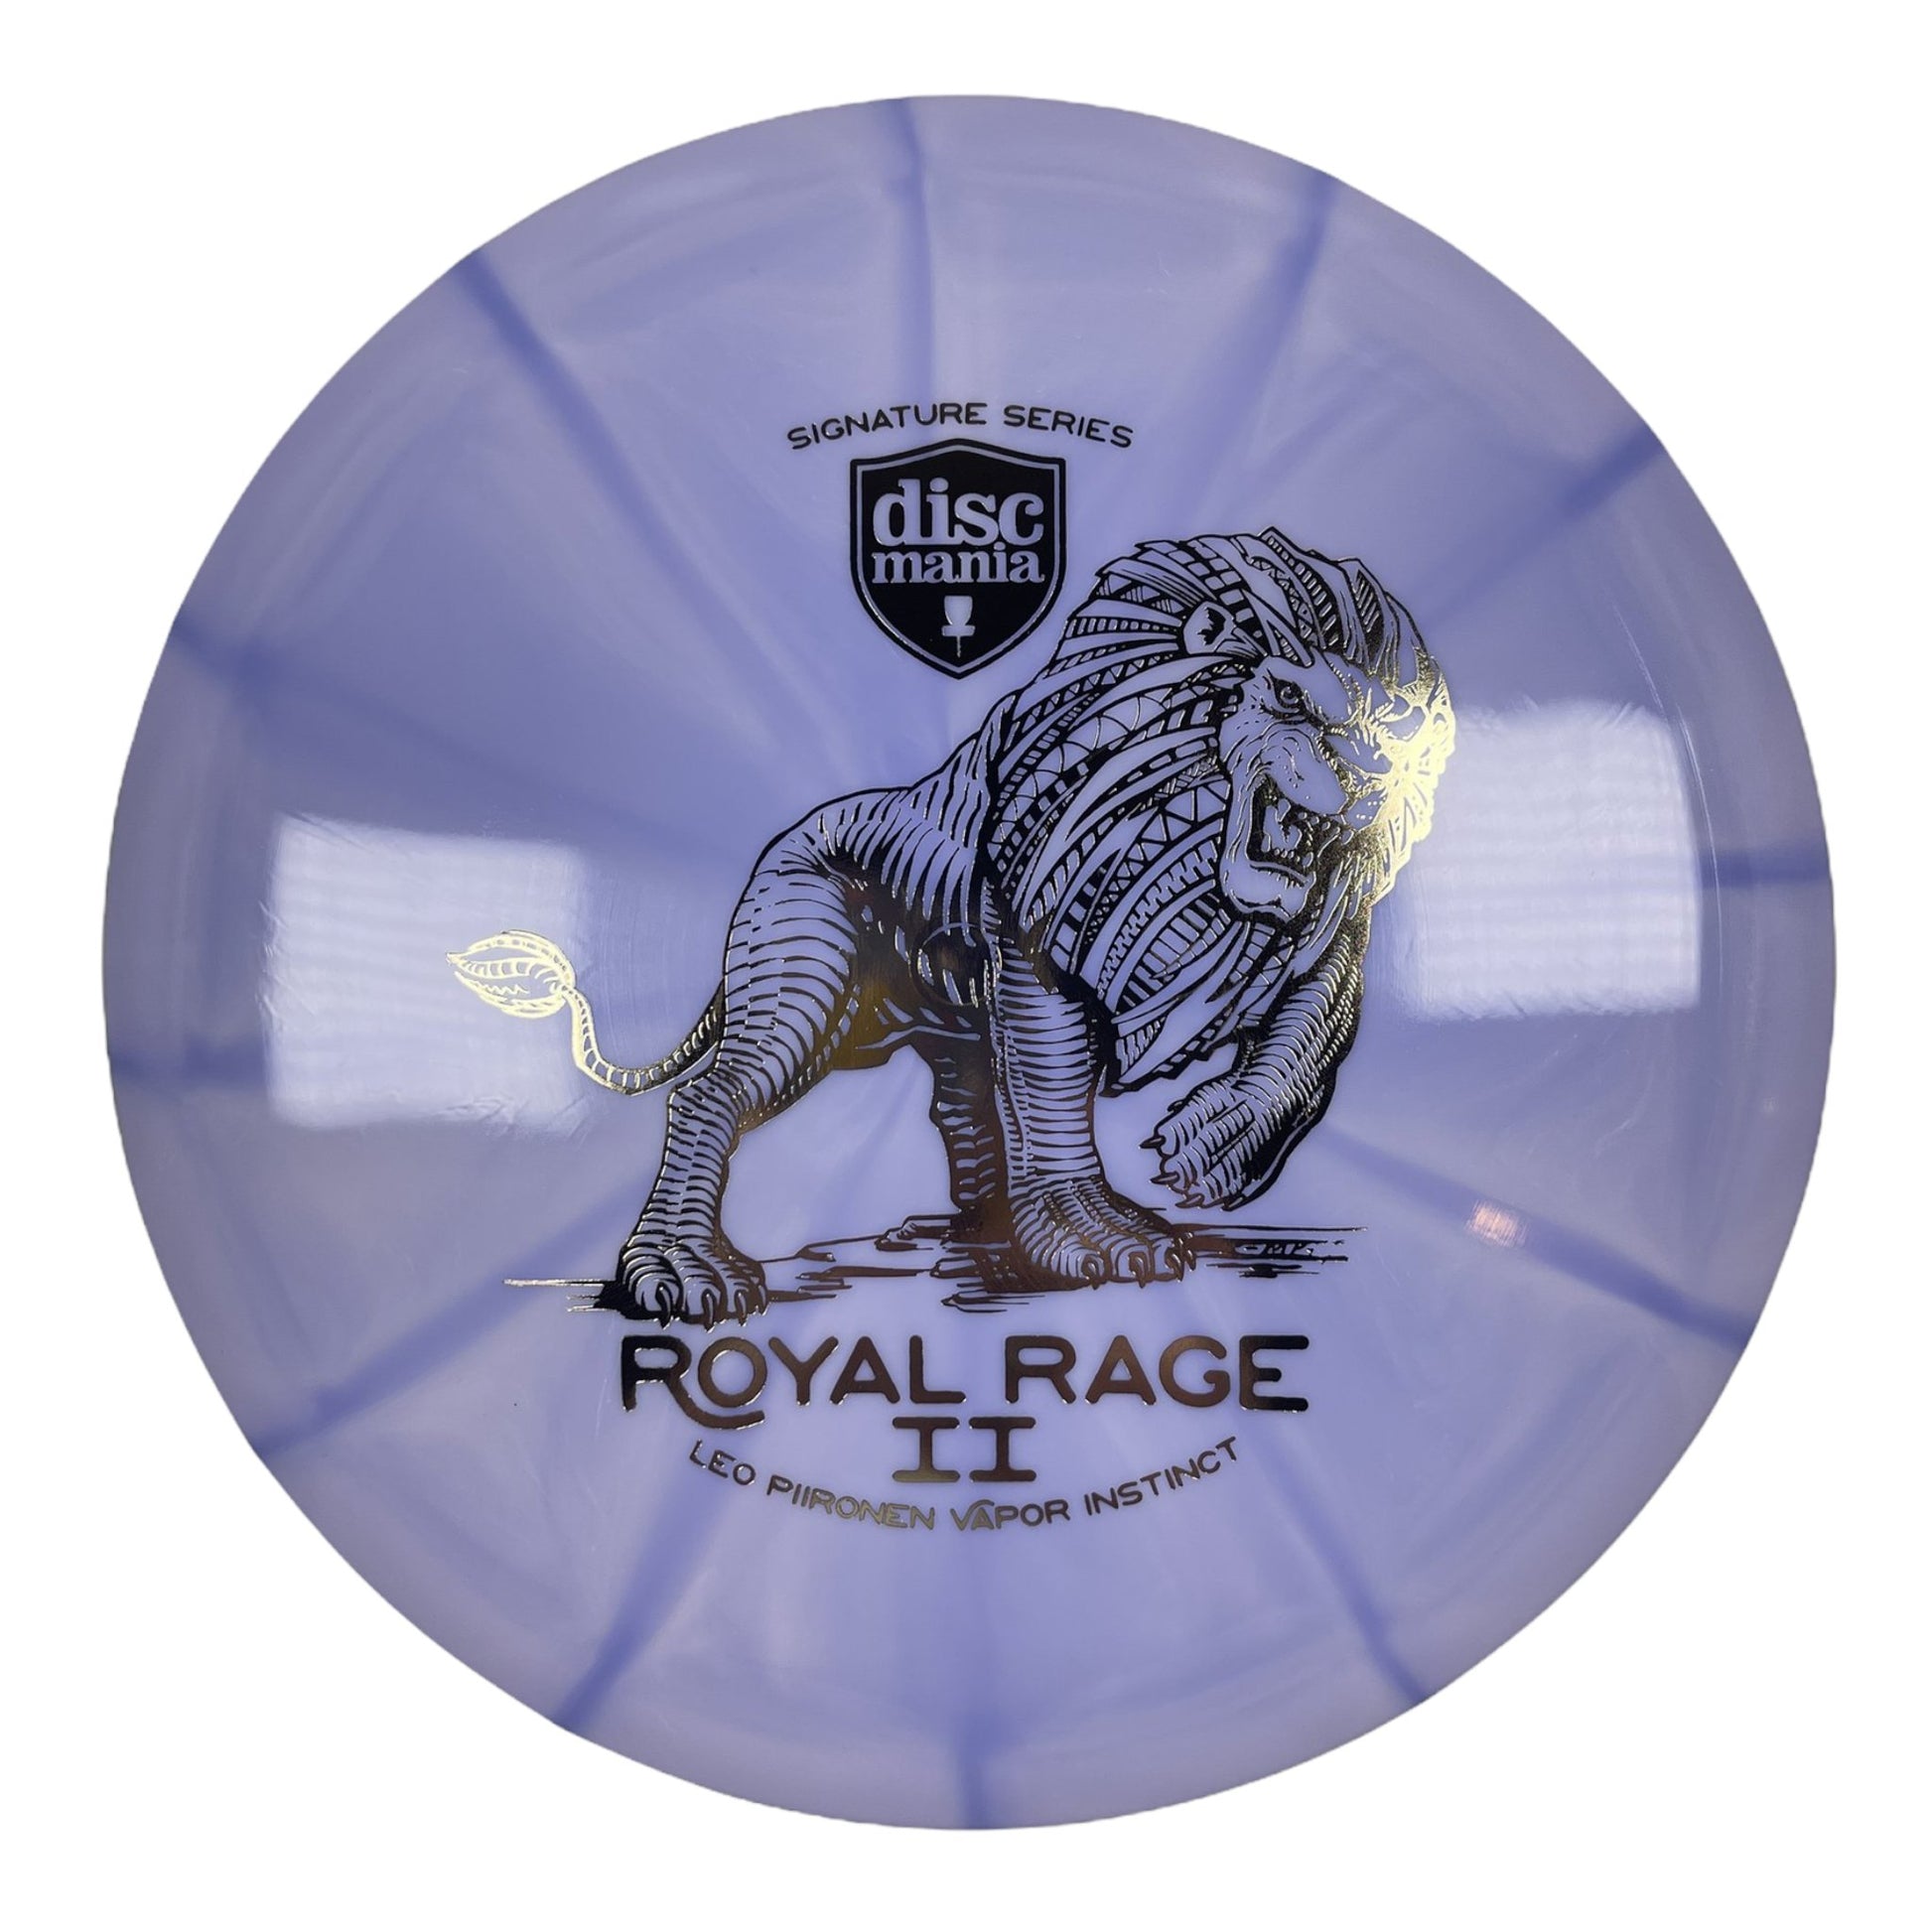 Discmania Royal Rage 2 - Instinct | Lux Vapor | Lilac/Gold 173-176g (Leo Piironen) Disc Golf